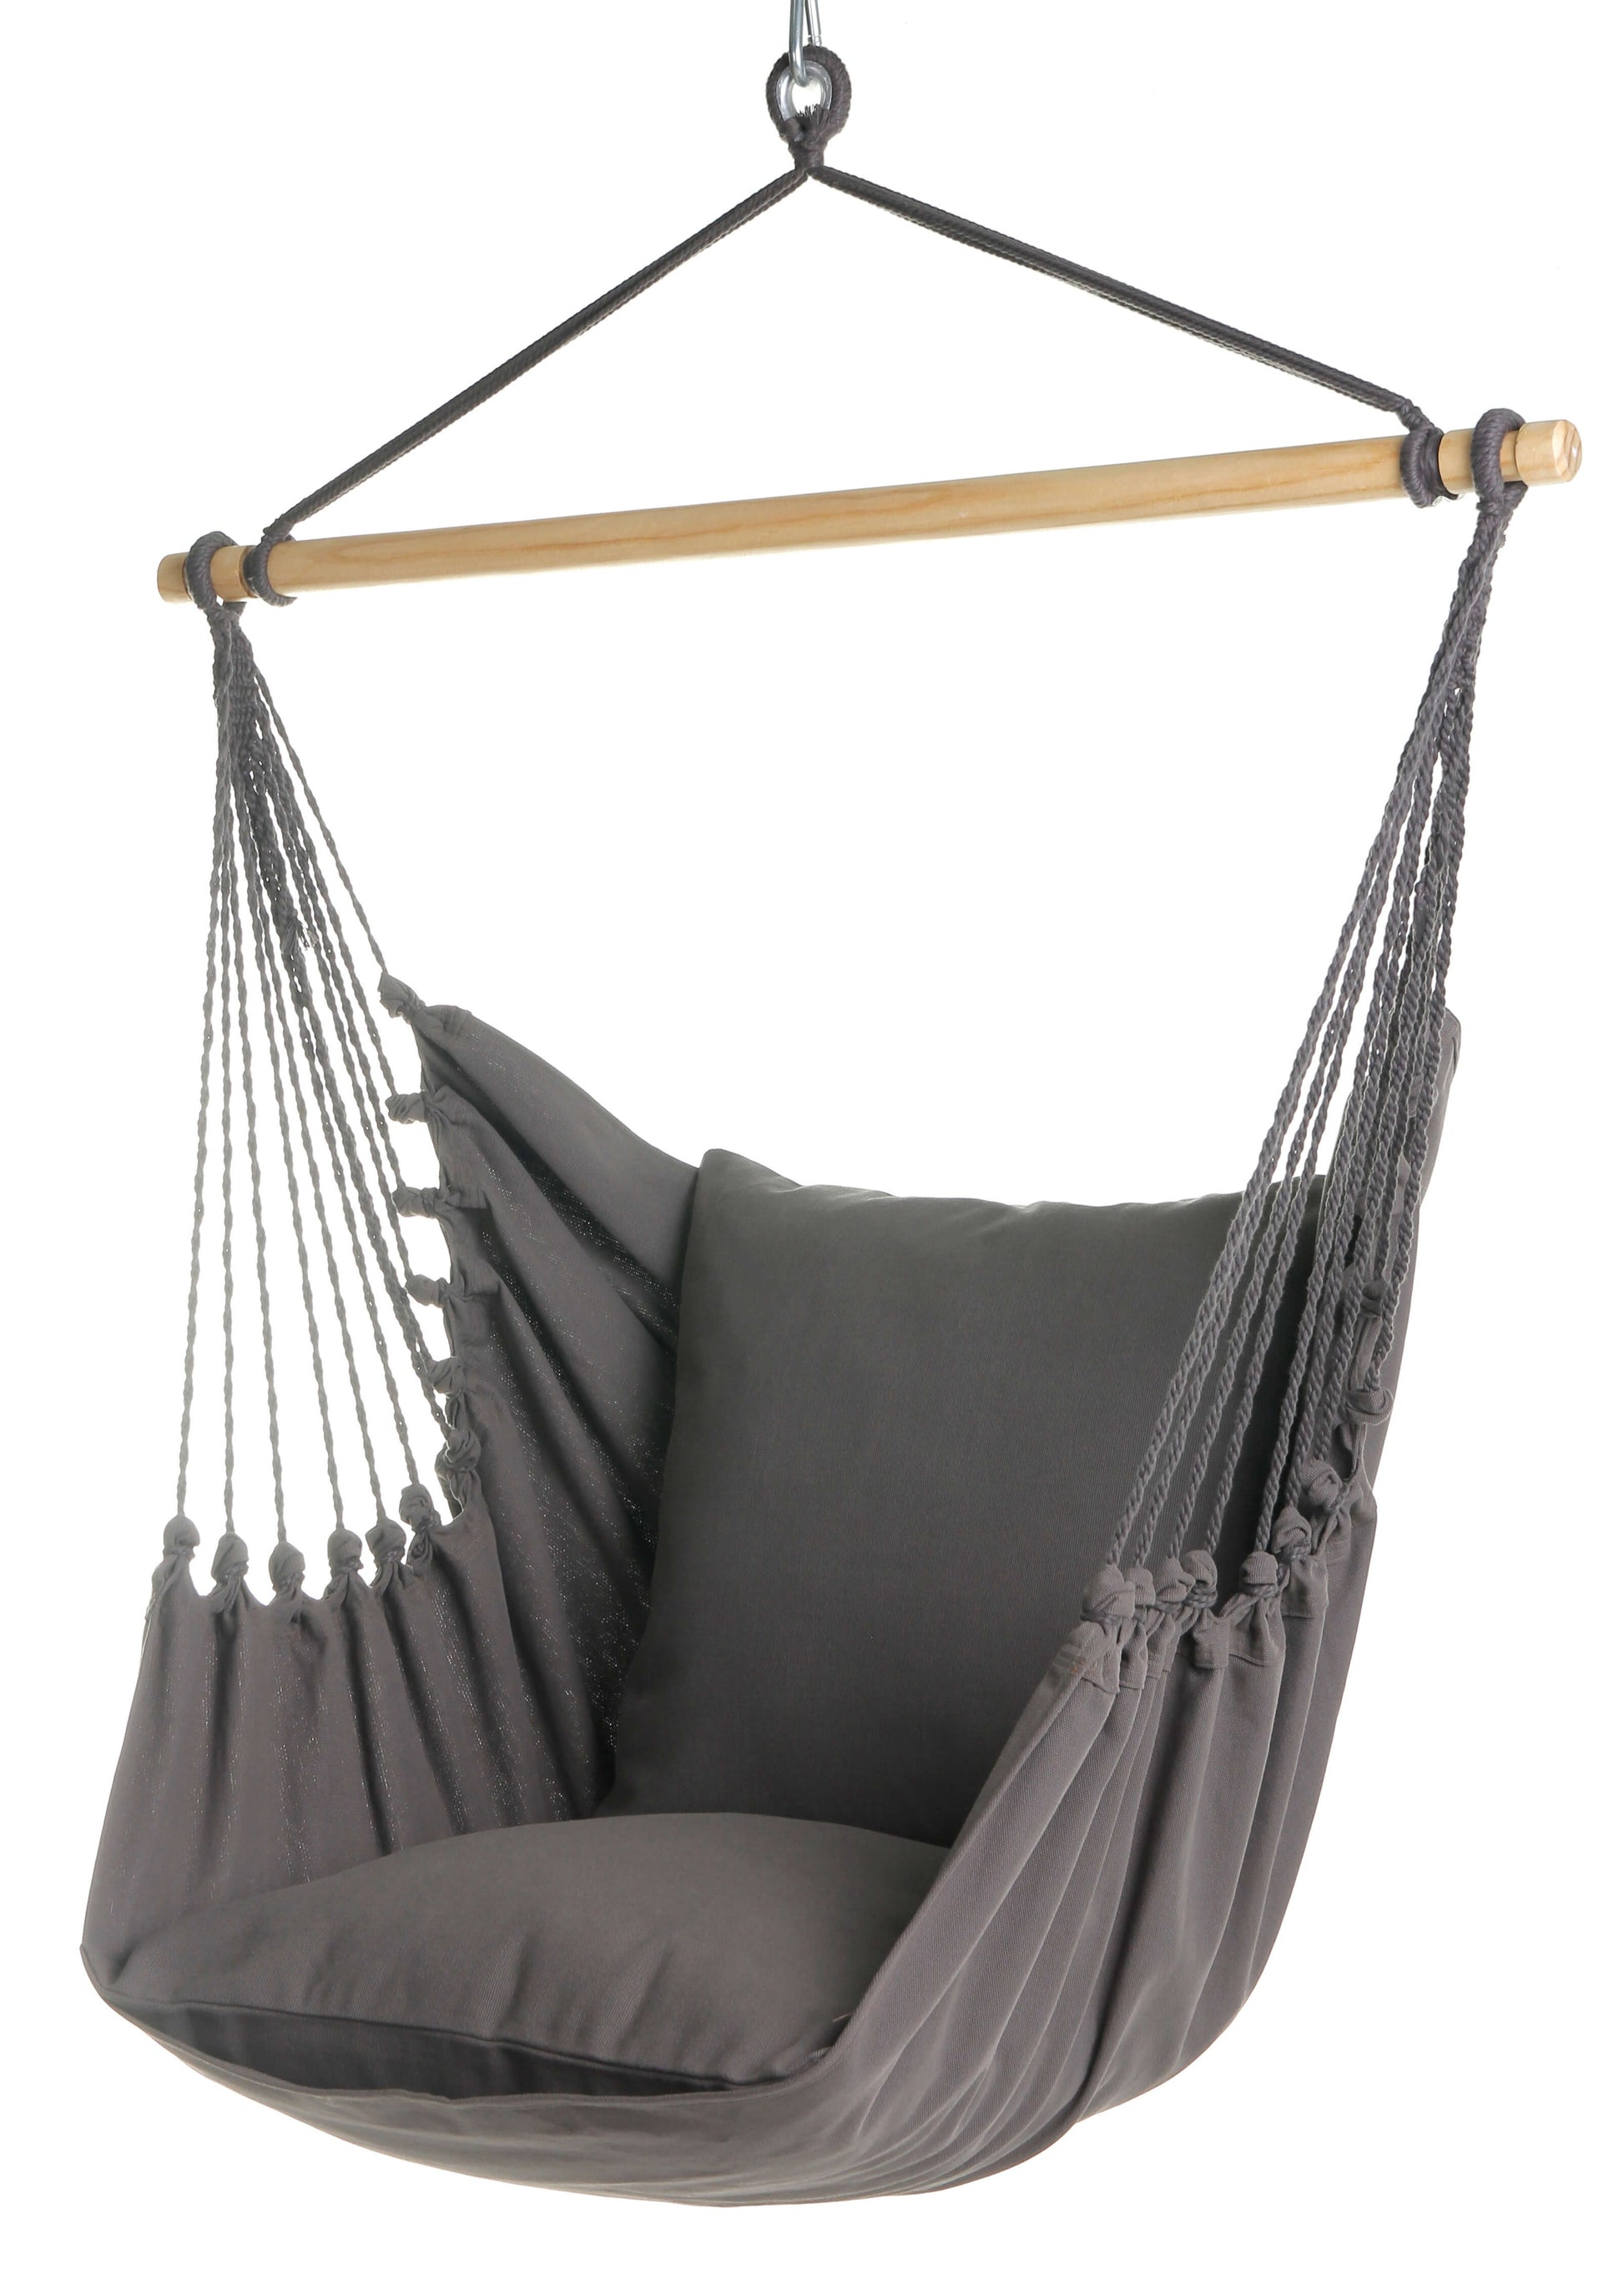 indoors hammock chair swing